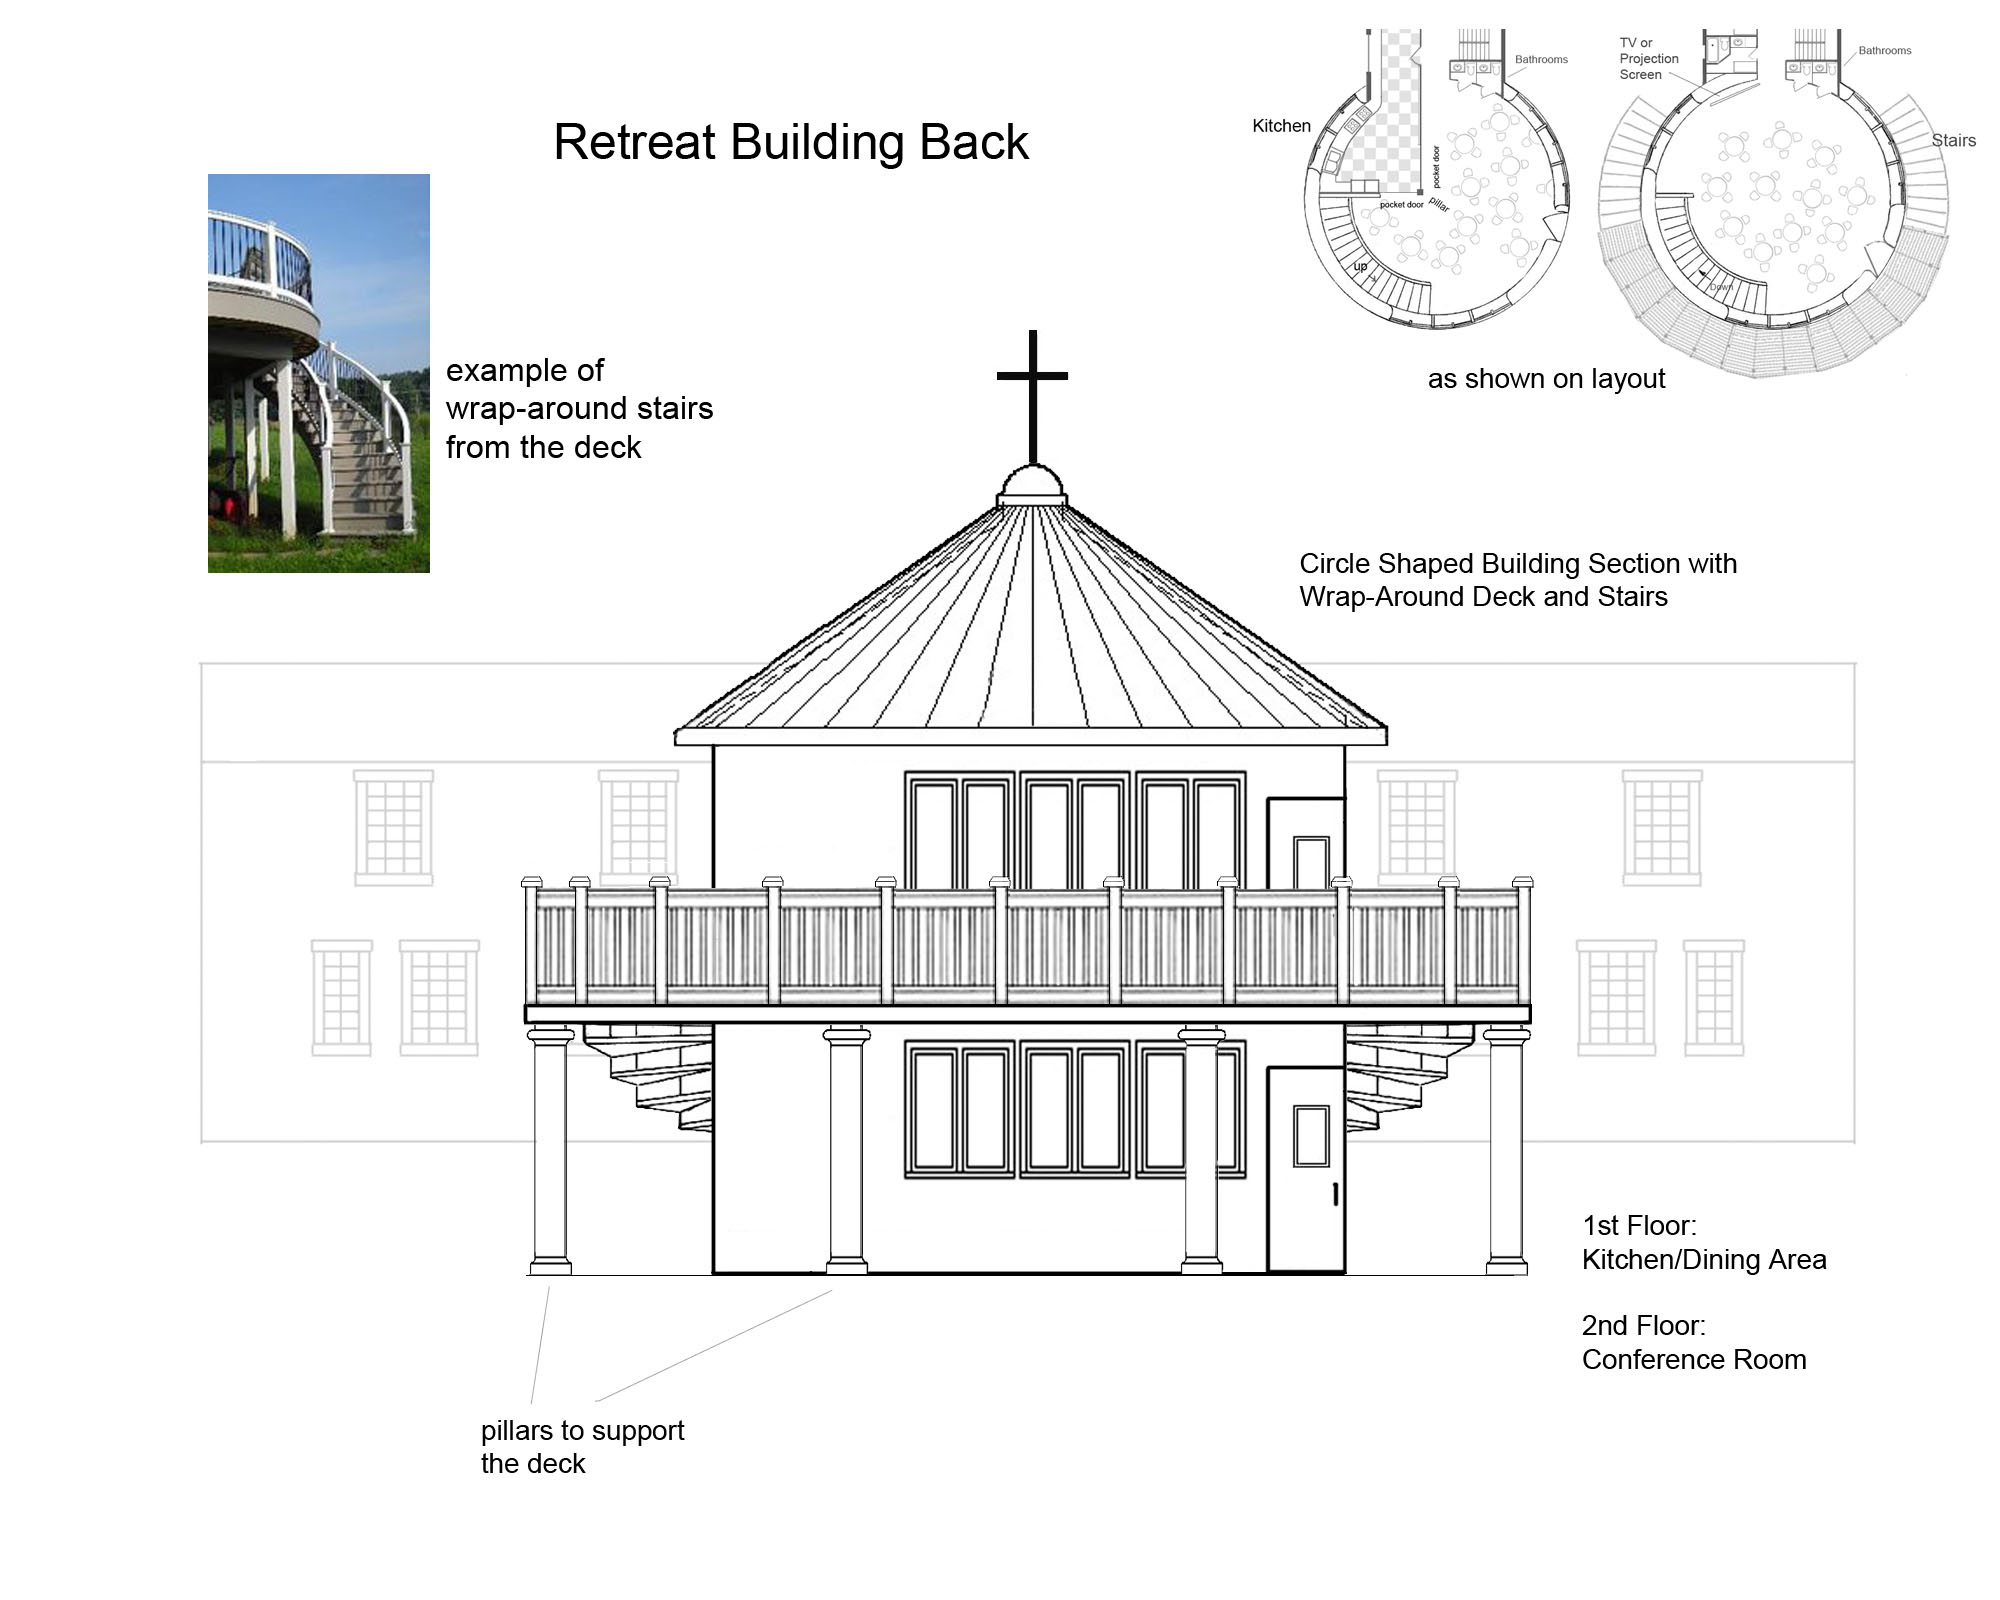 Retreat Building Design (Back)